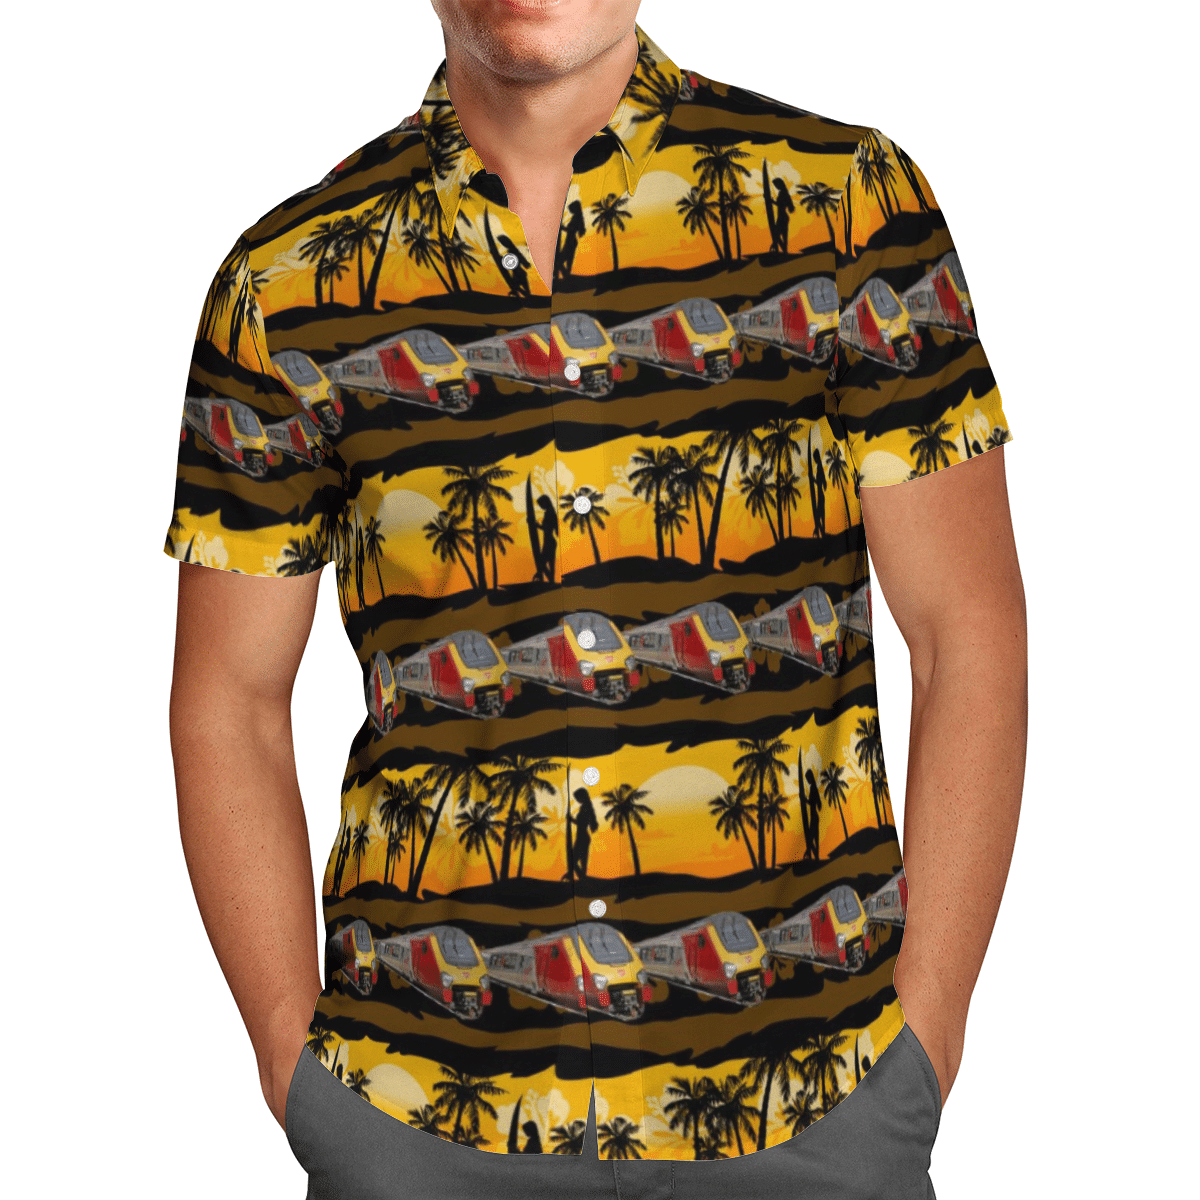 HOT Virgin Trains 221 Super Voyager All Over Print Tropical Shirt1